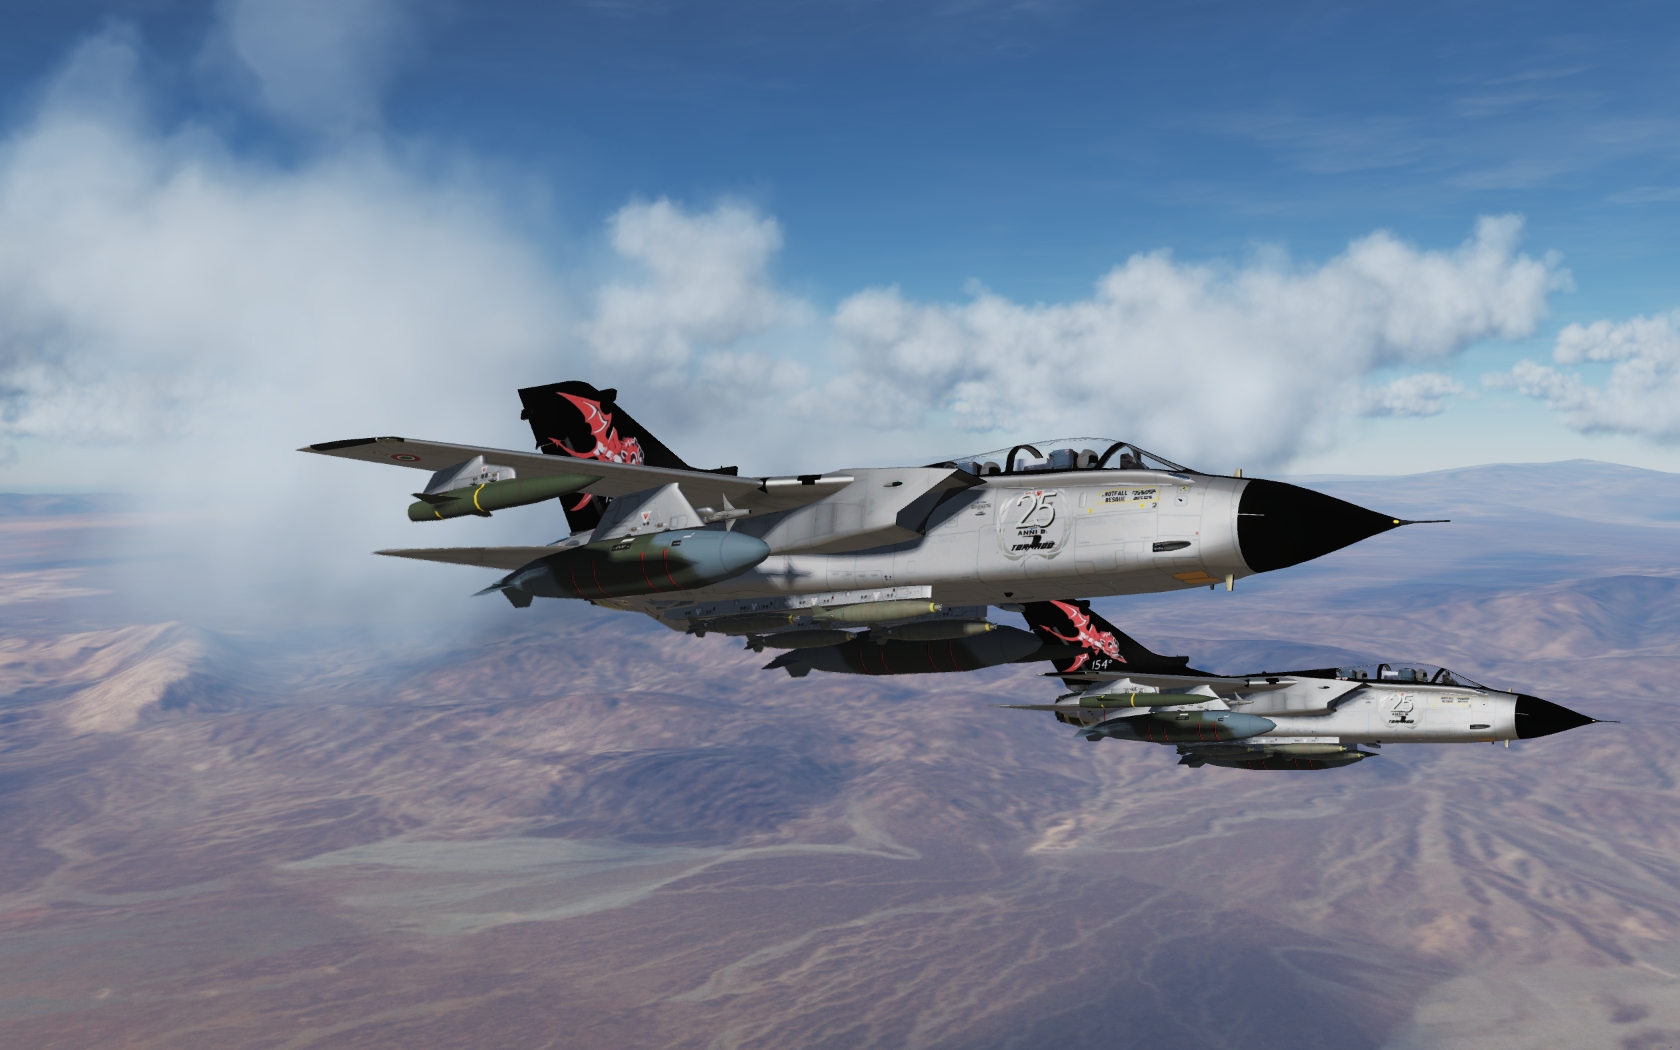 DCS WORLD 米格21比斯 + 米格29 + Tornado + A-10  混战游戏截图-7229 